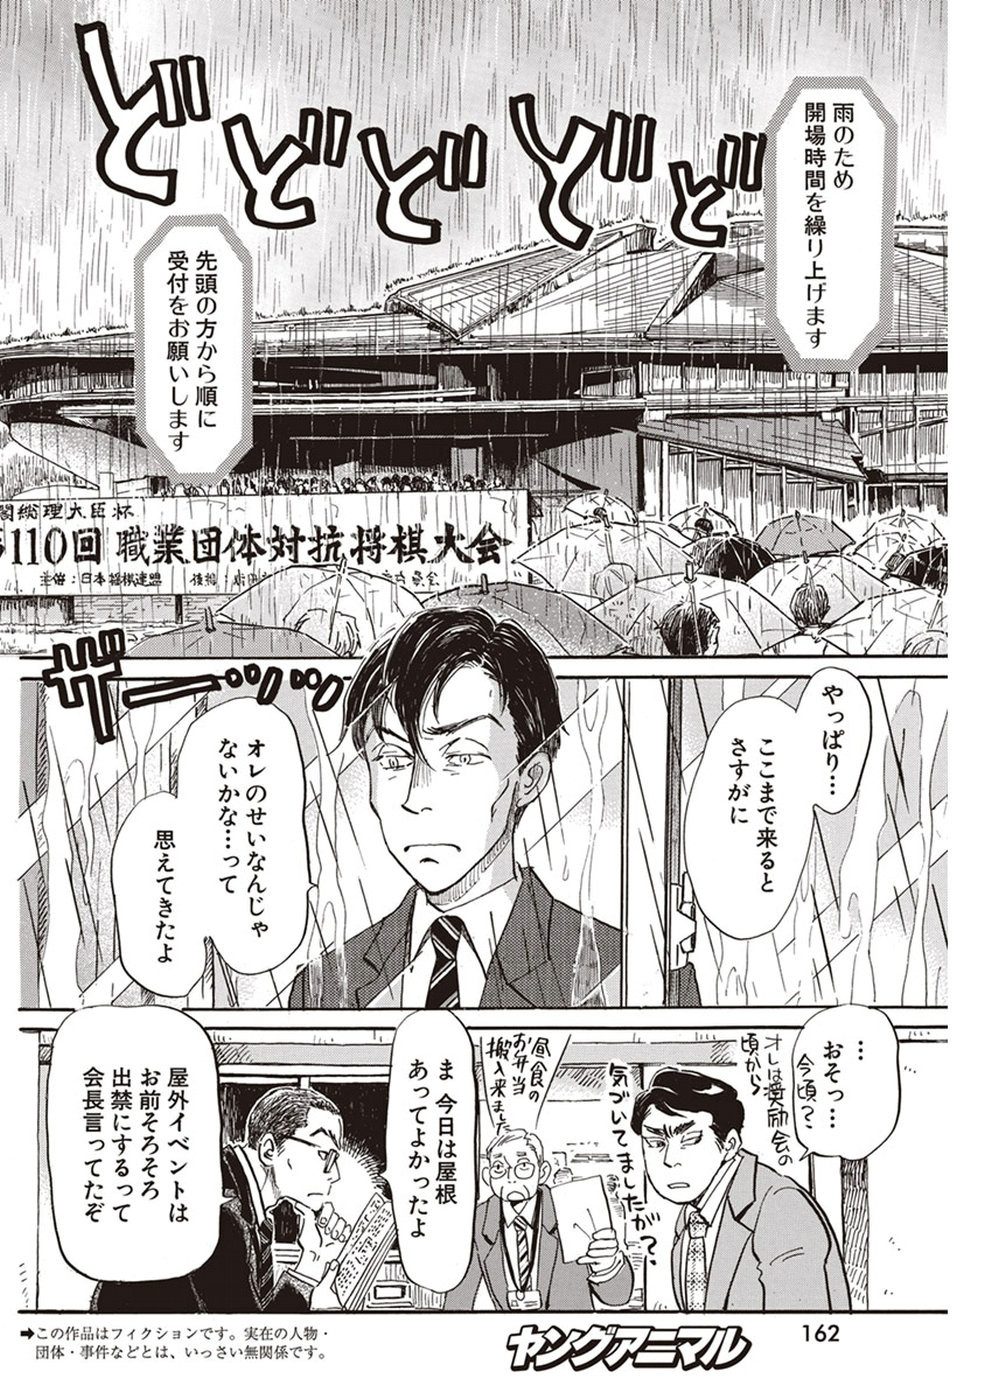 3 Gatsu no Lion - Chapter 149 - Page 2